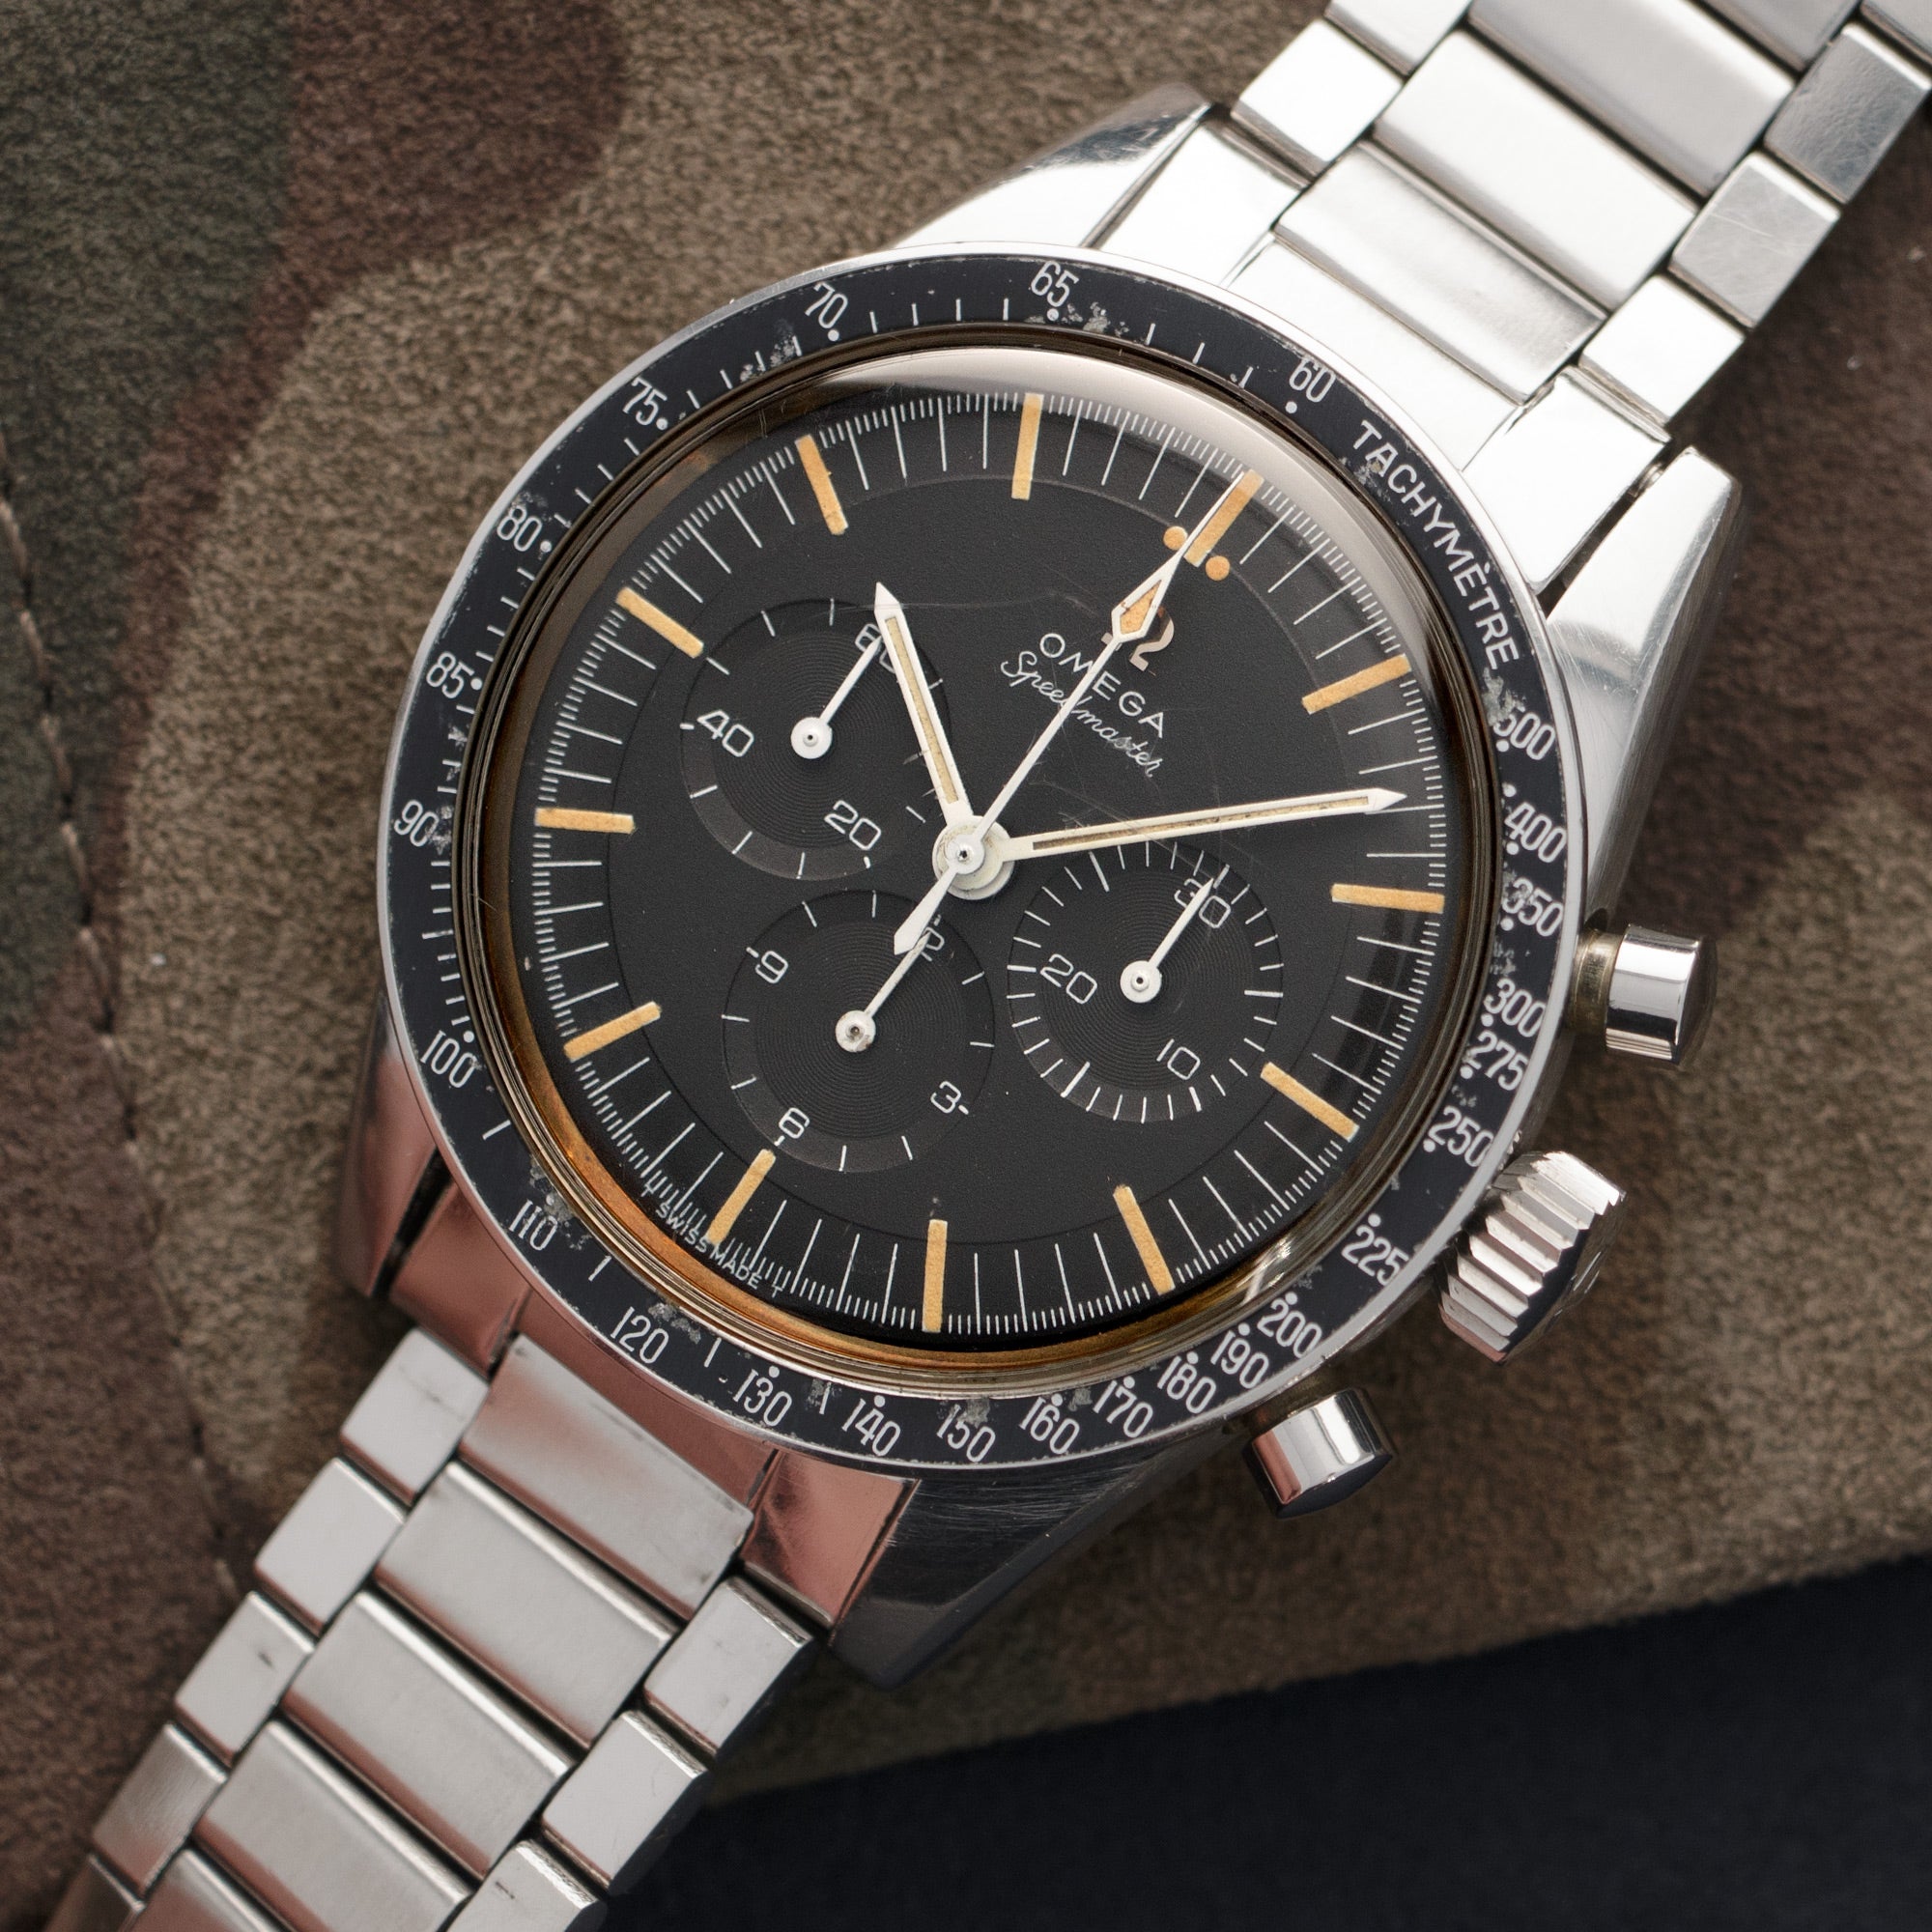 Omega - Omega Speedmaster Chronograph Ed White Watch Ref. 105.003 - The Keystone Watches